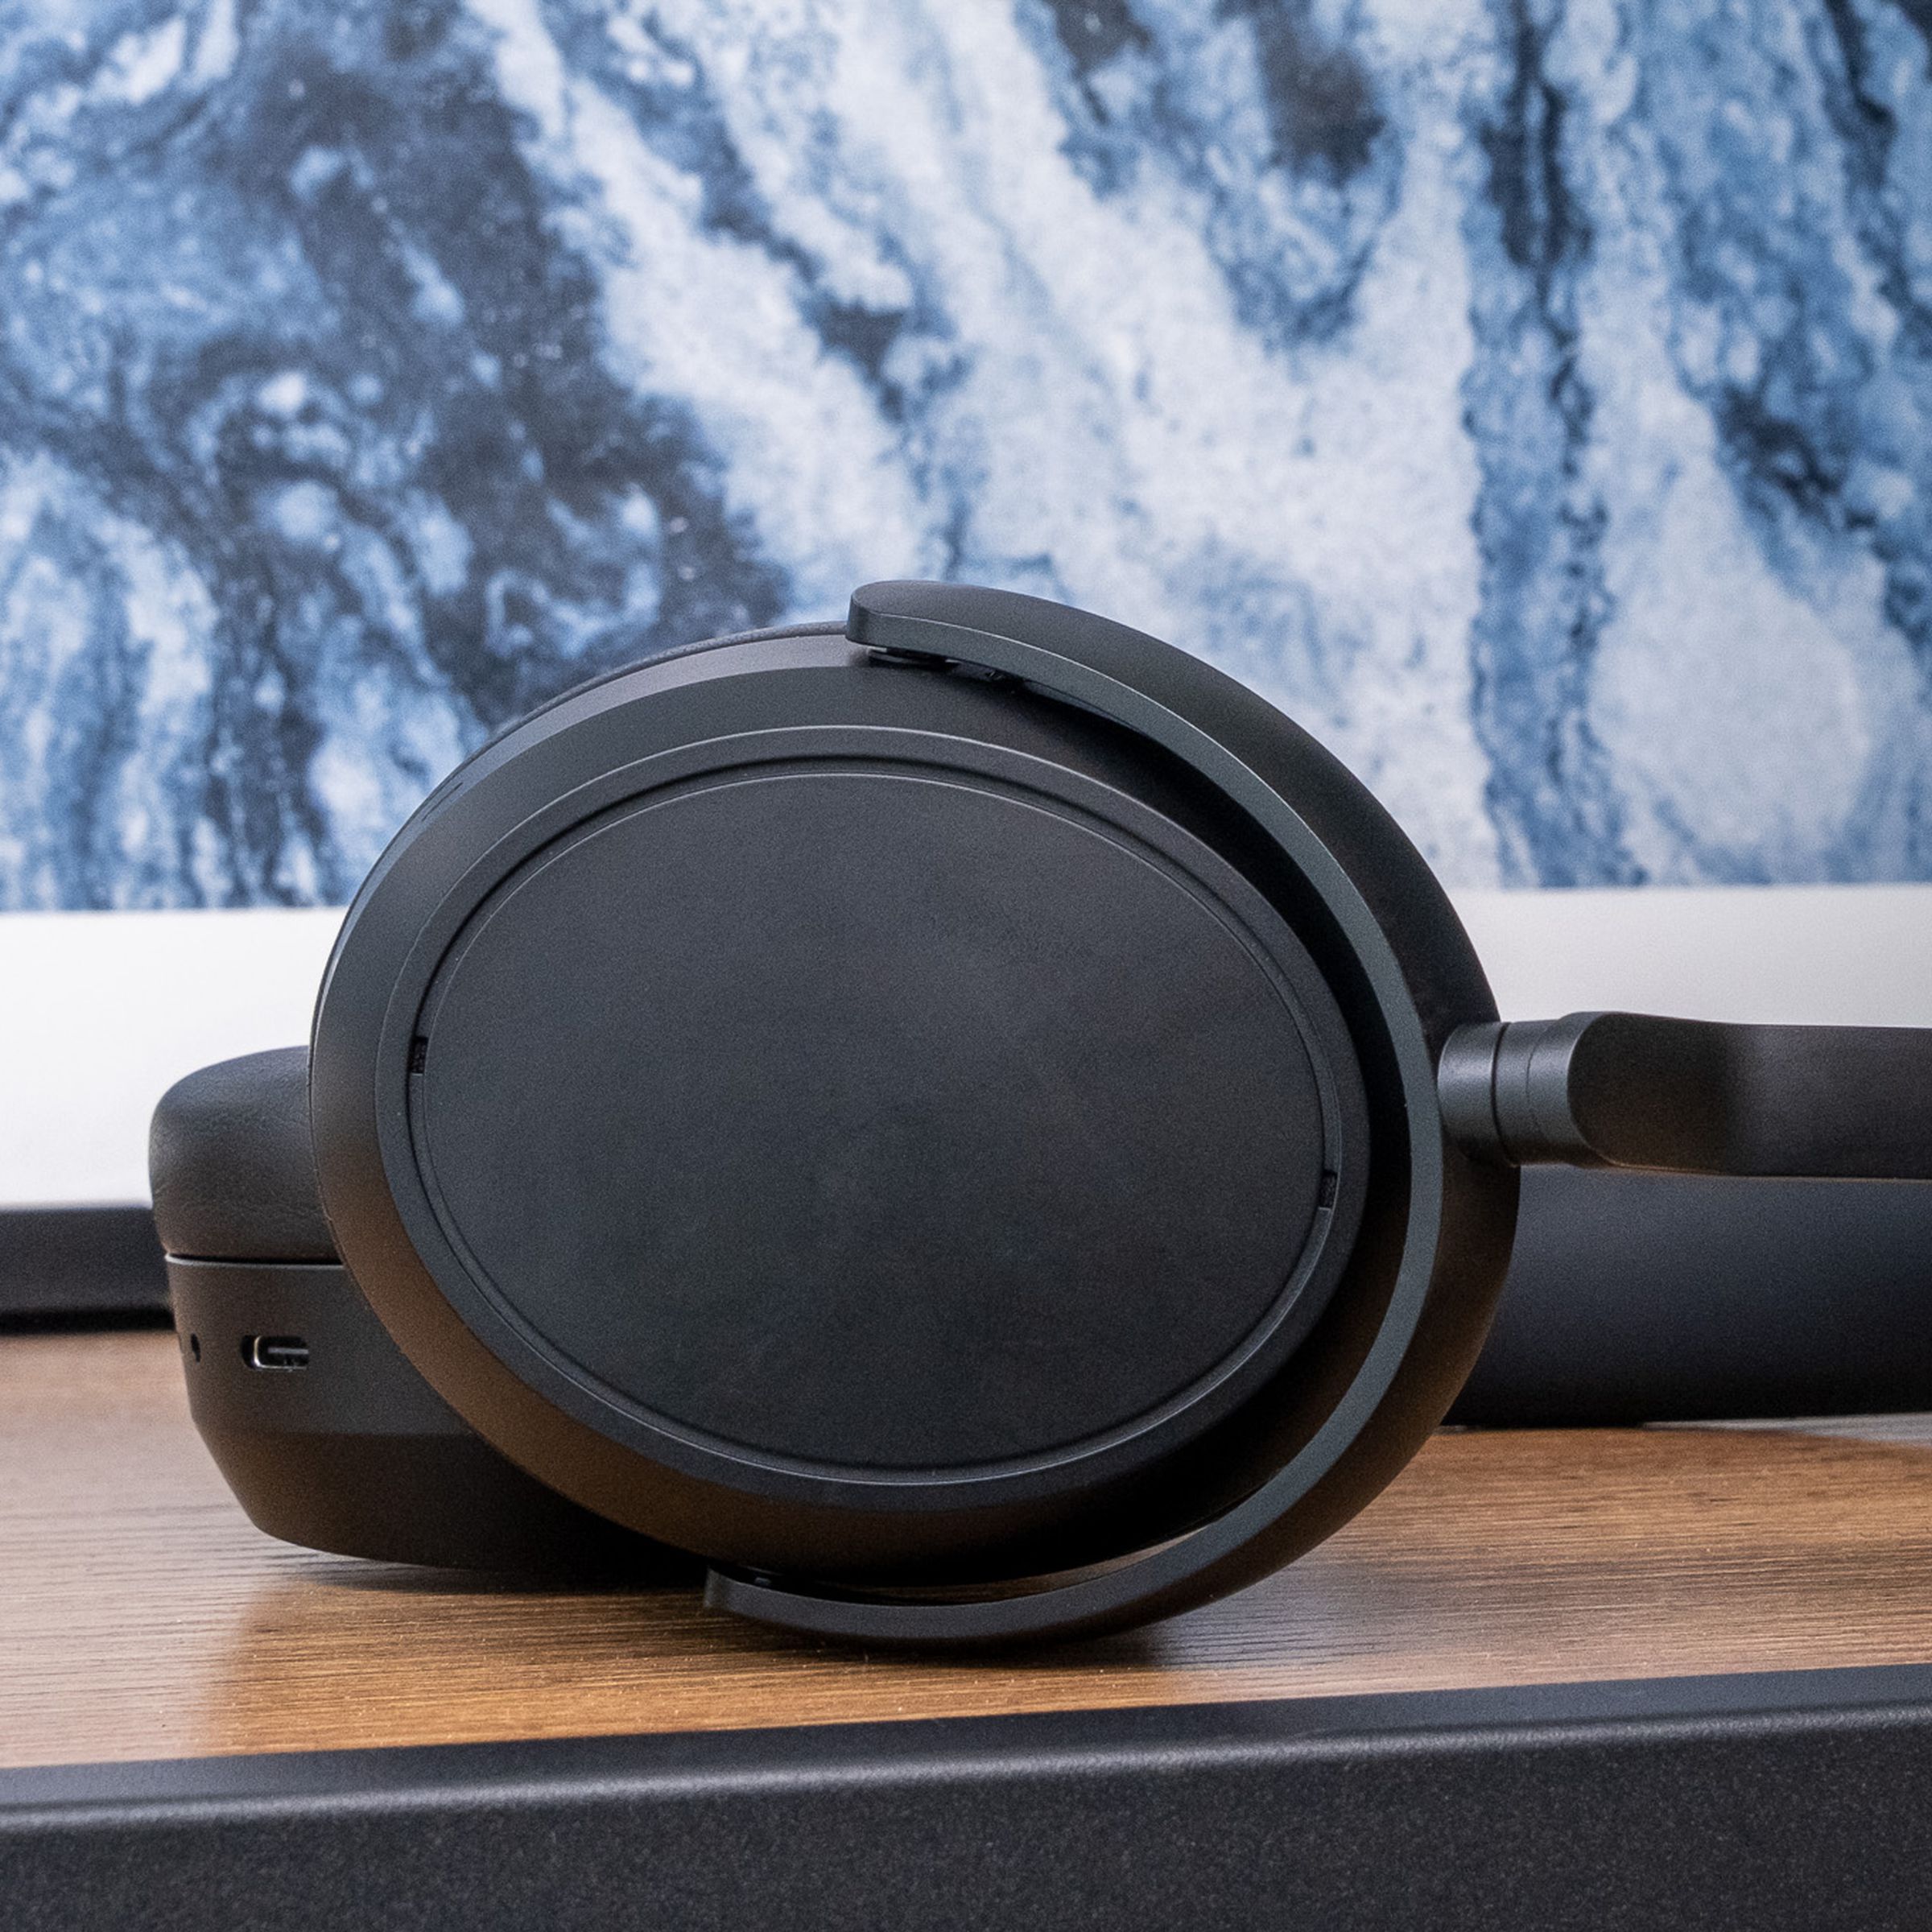 A photo of Sennheiser’s Momentum 4 Wireless headphones on a table.